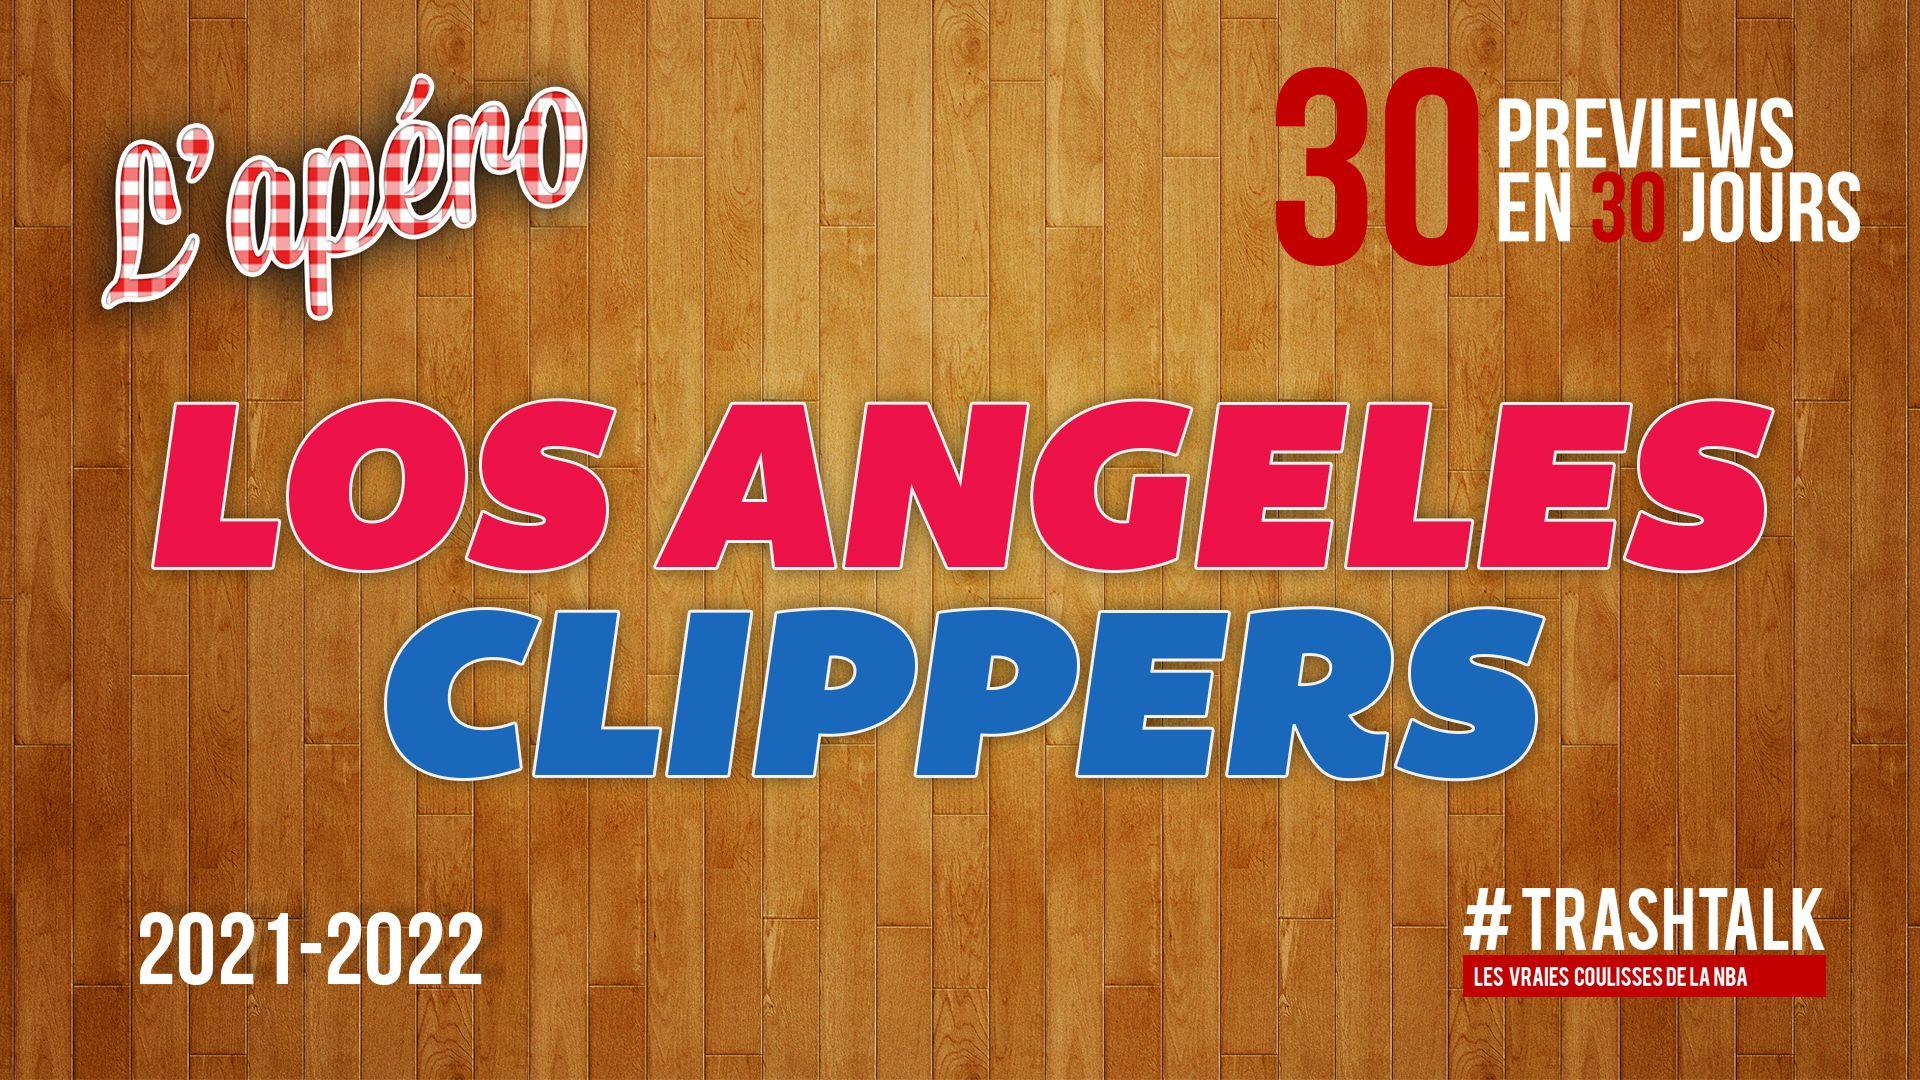 Apéro Clippers 23 septembre 2021